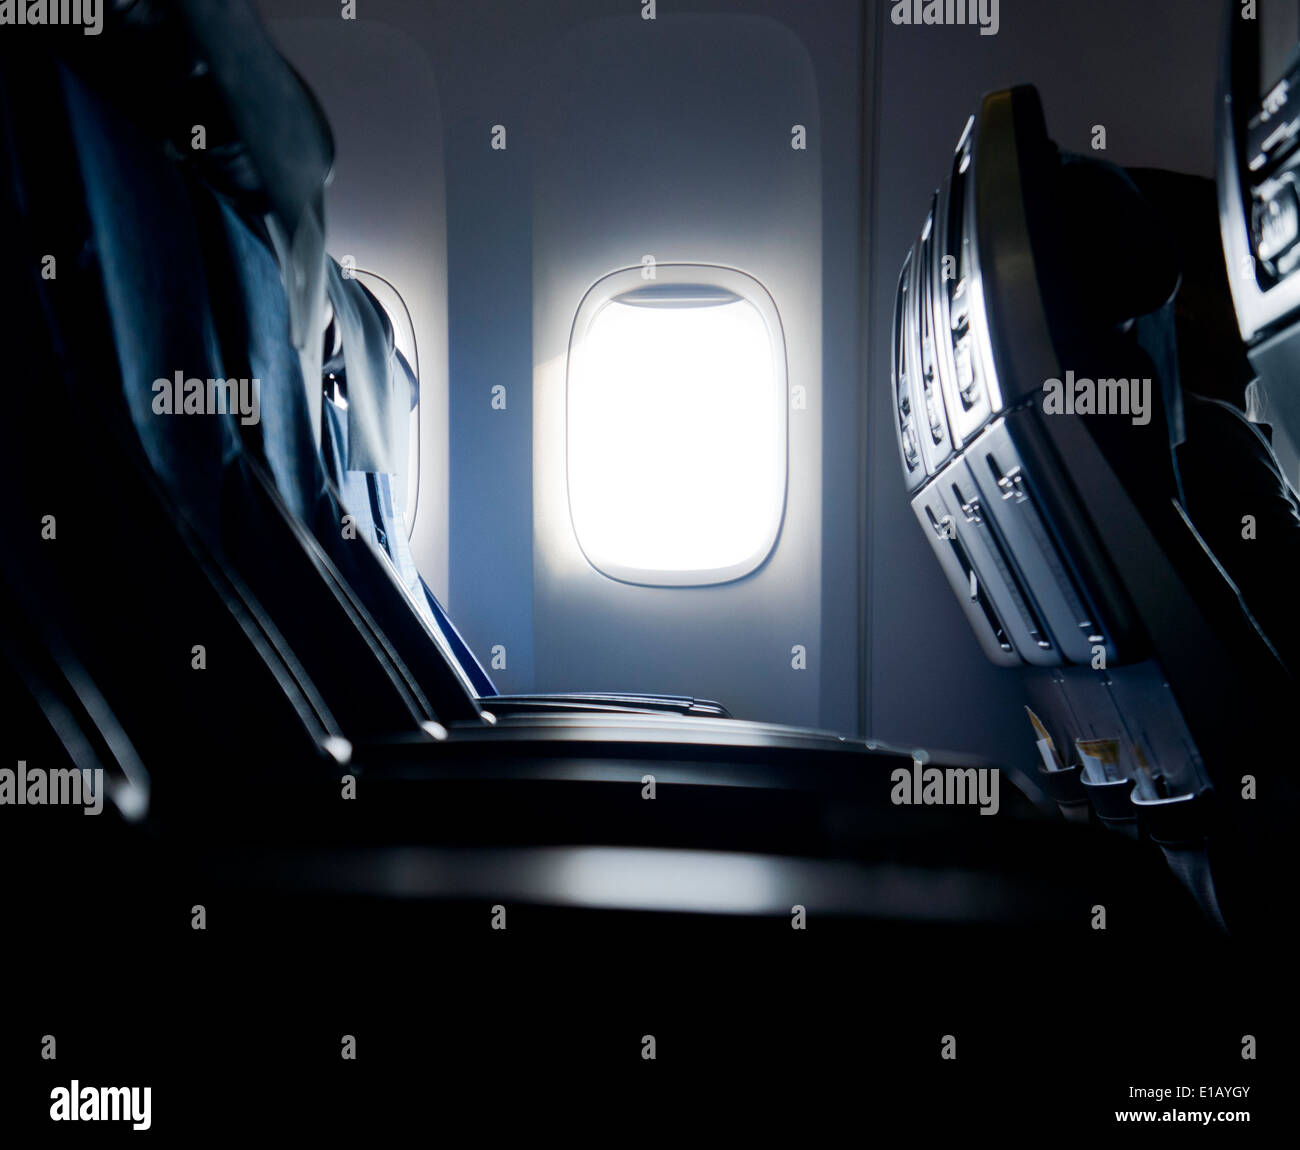 Empty aircraft seats and windows. Stock Photo